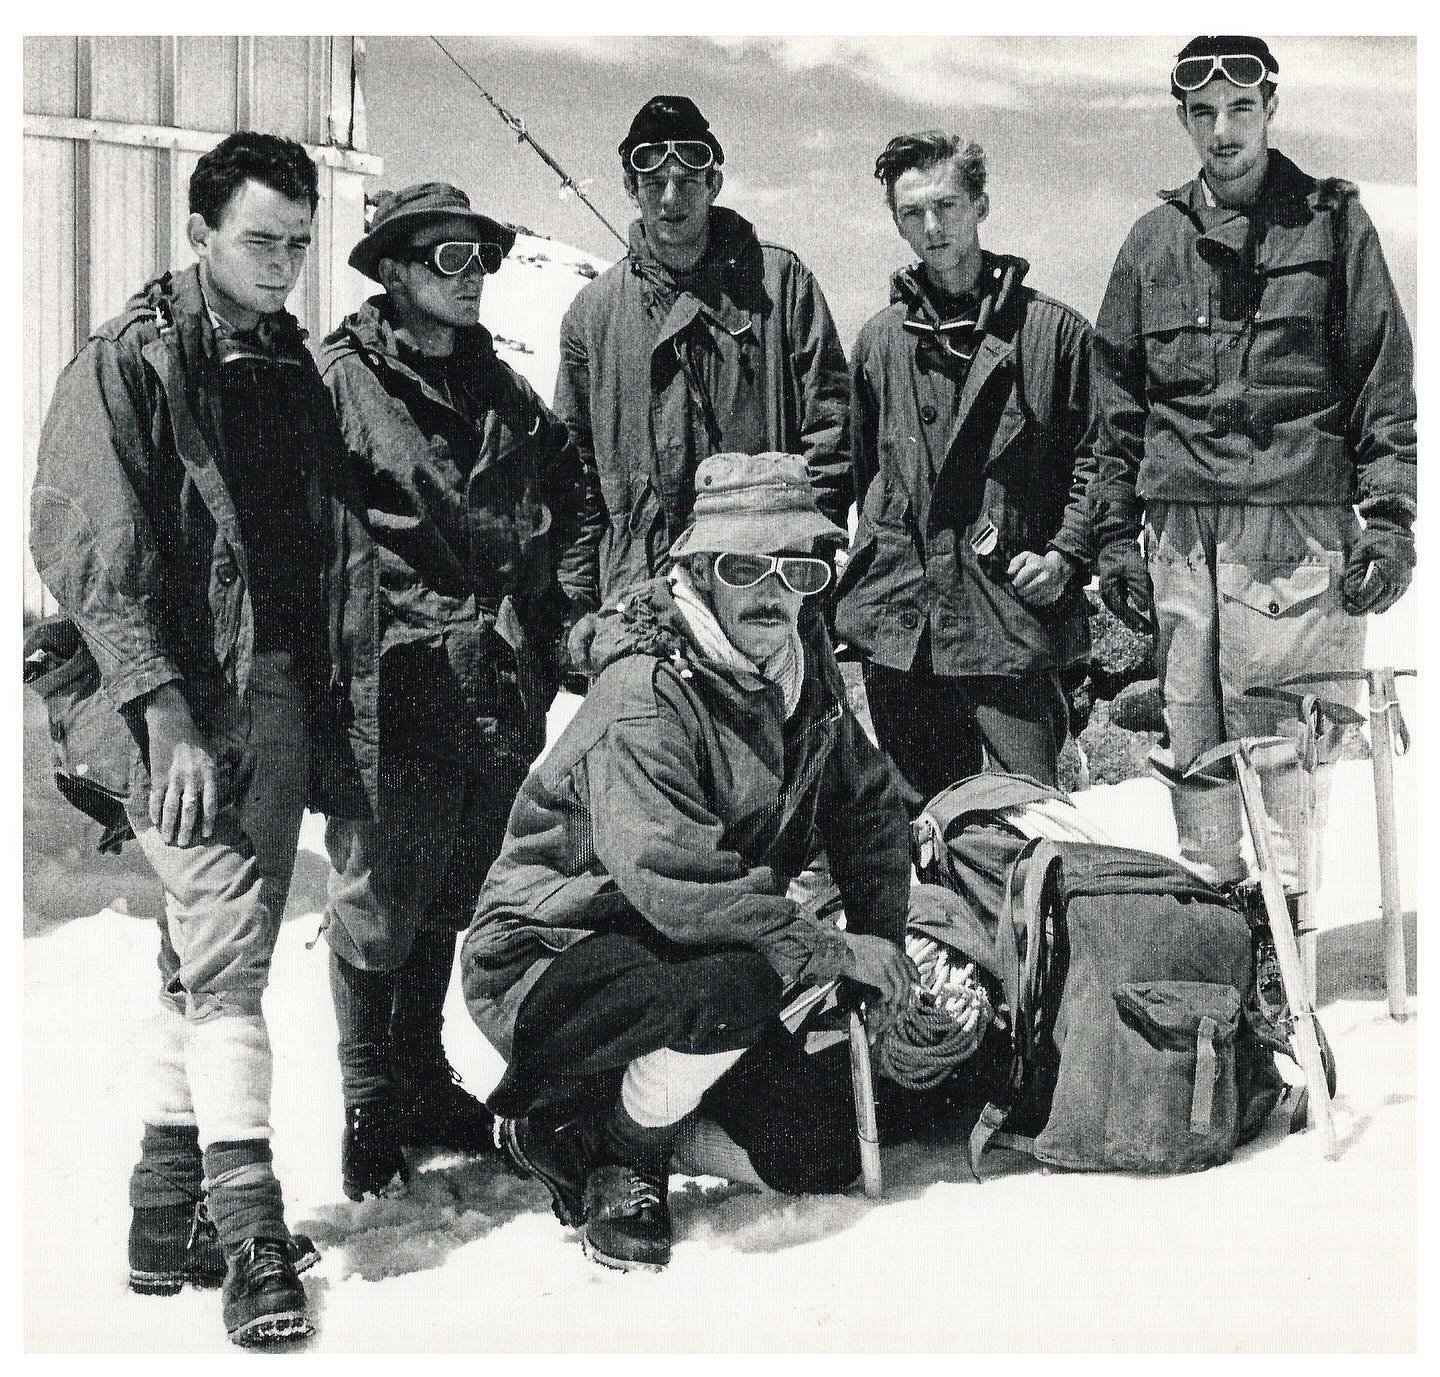 The RAF Mountain Rescue fashion squad.